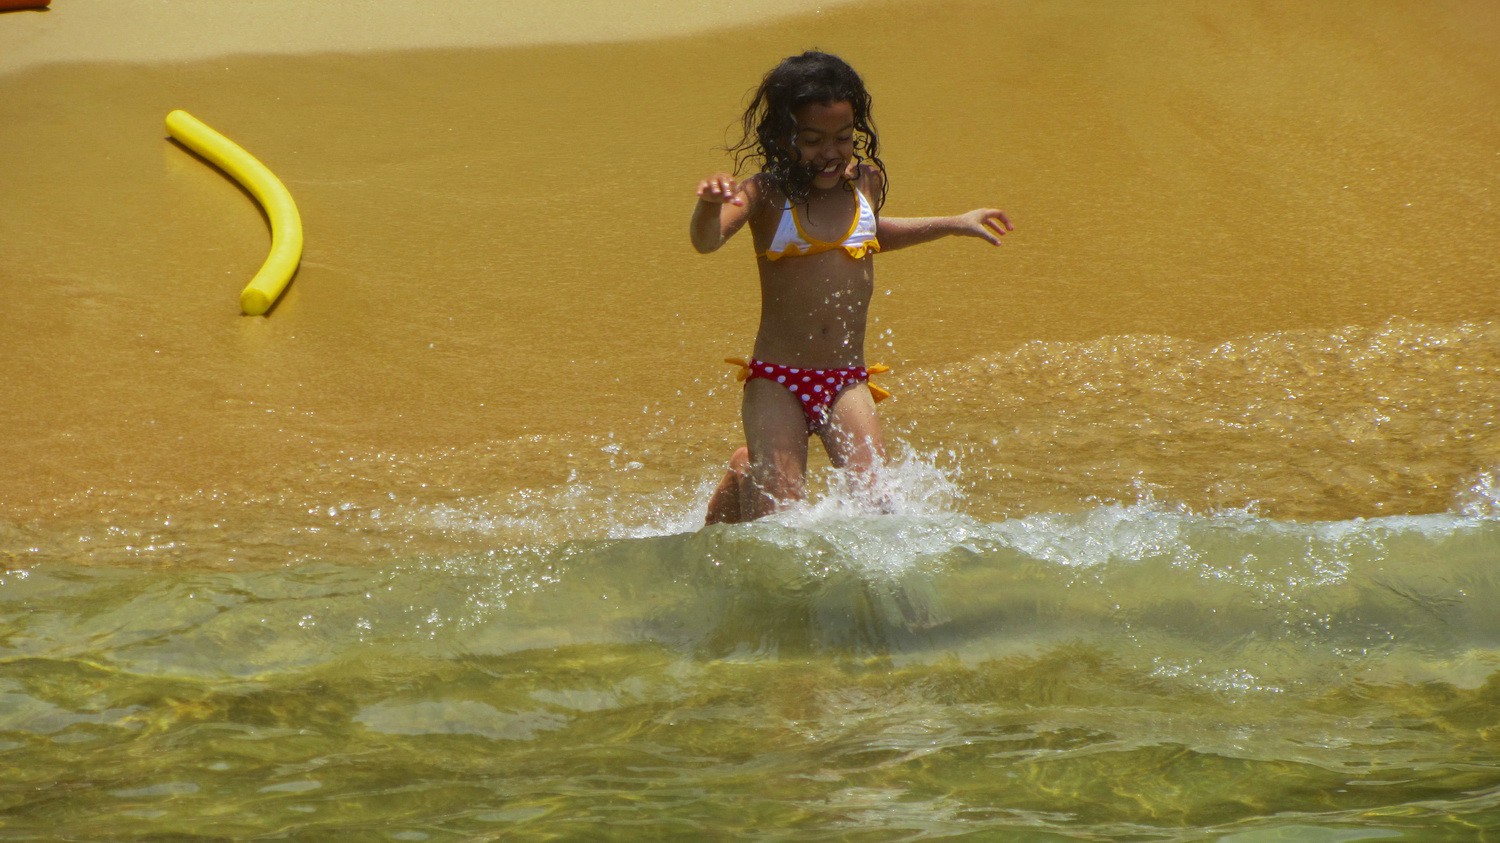 Pretty girl running into the ocean